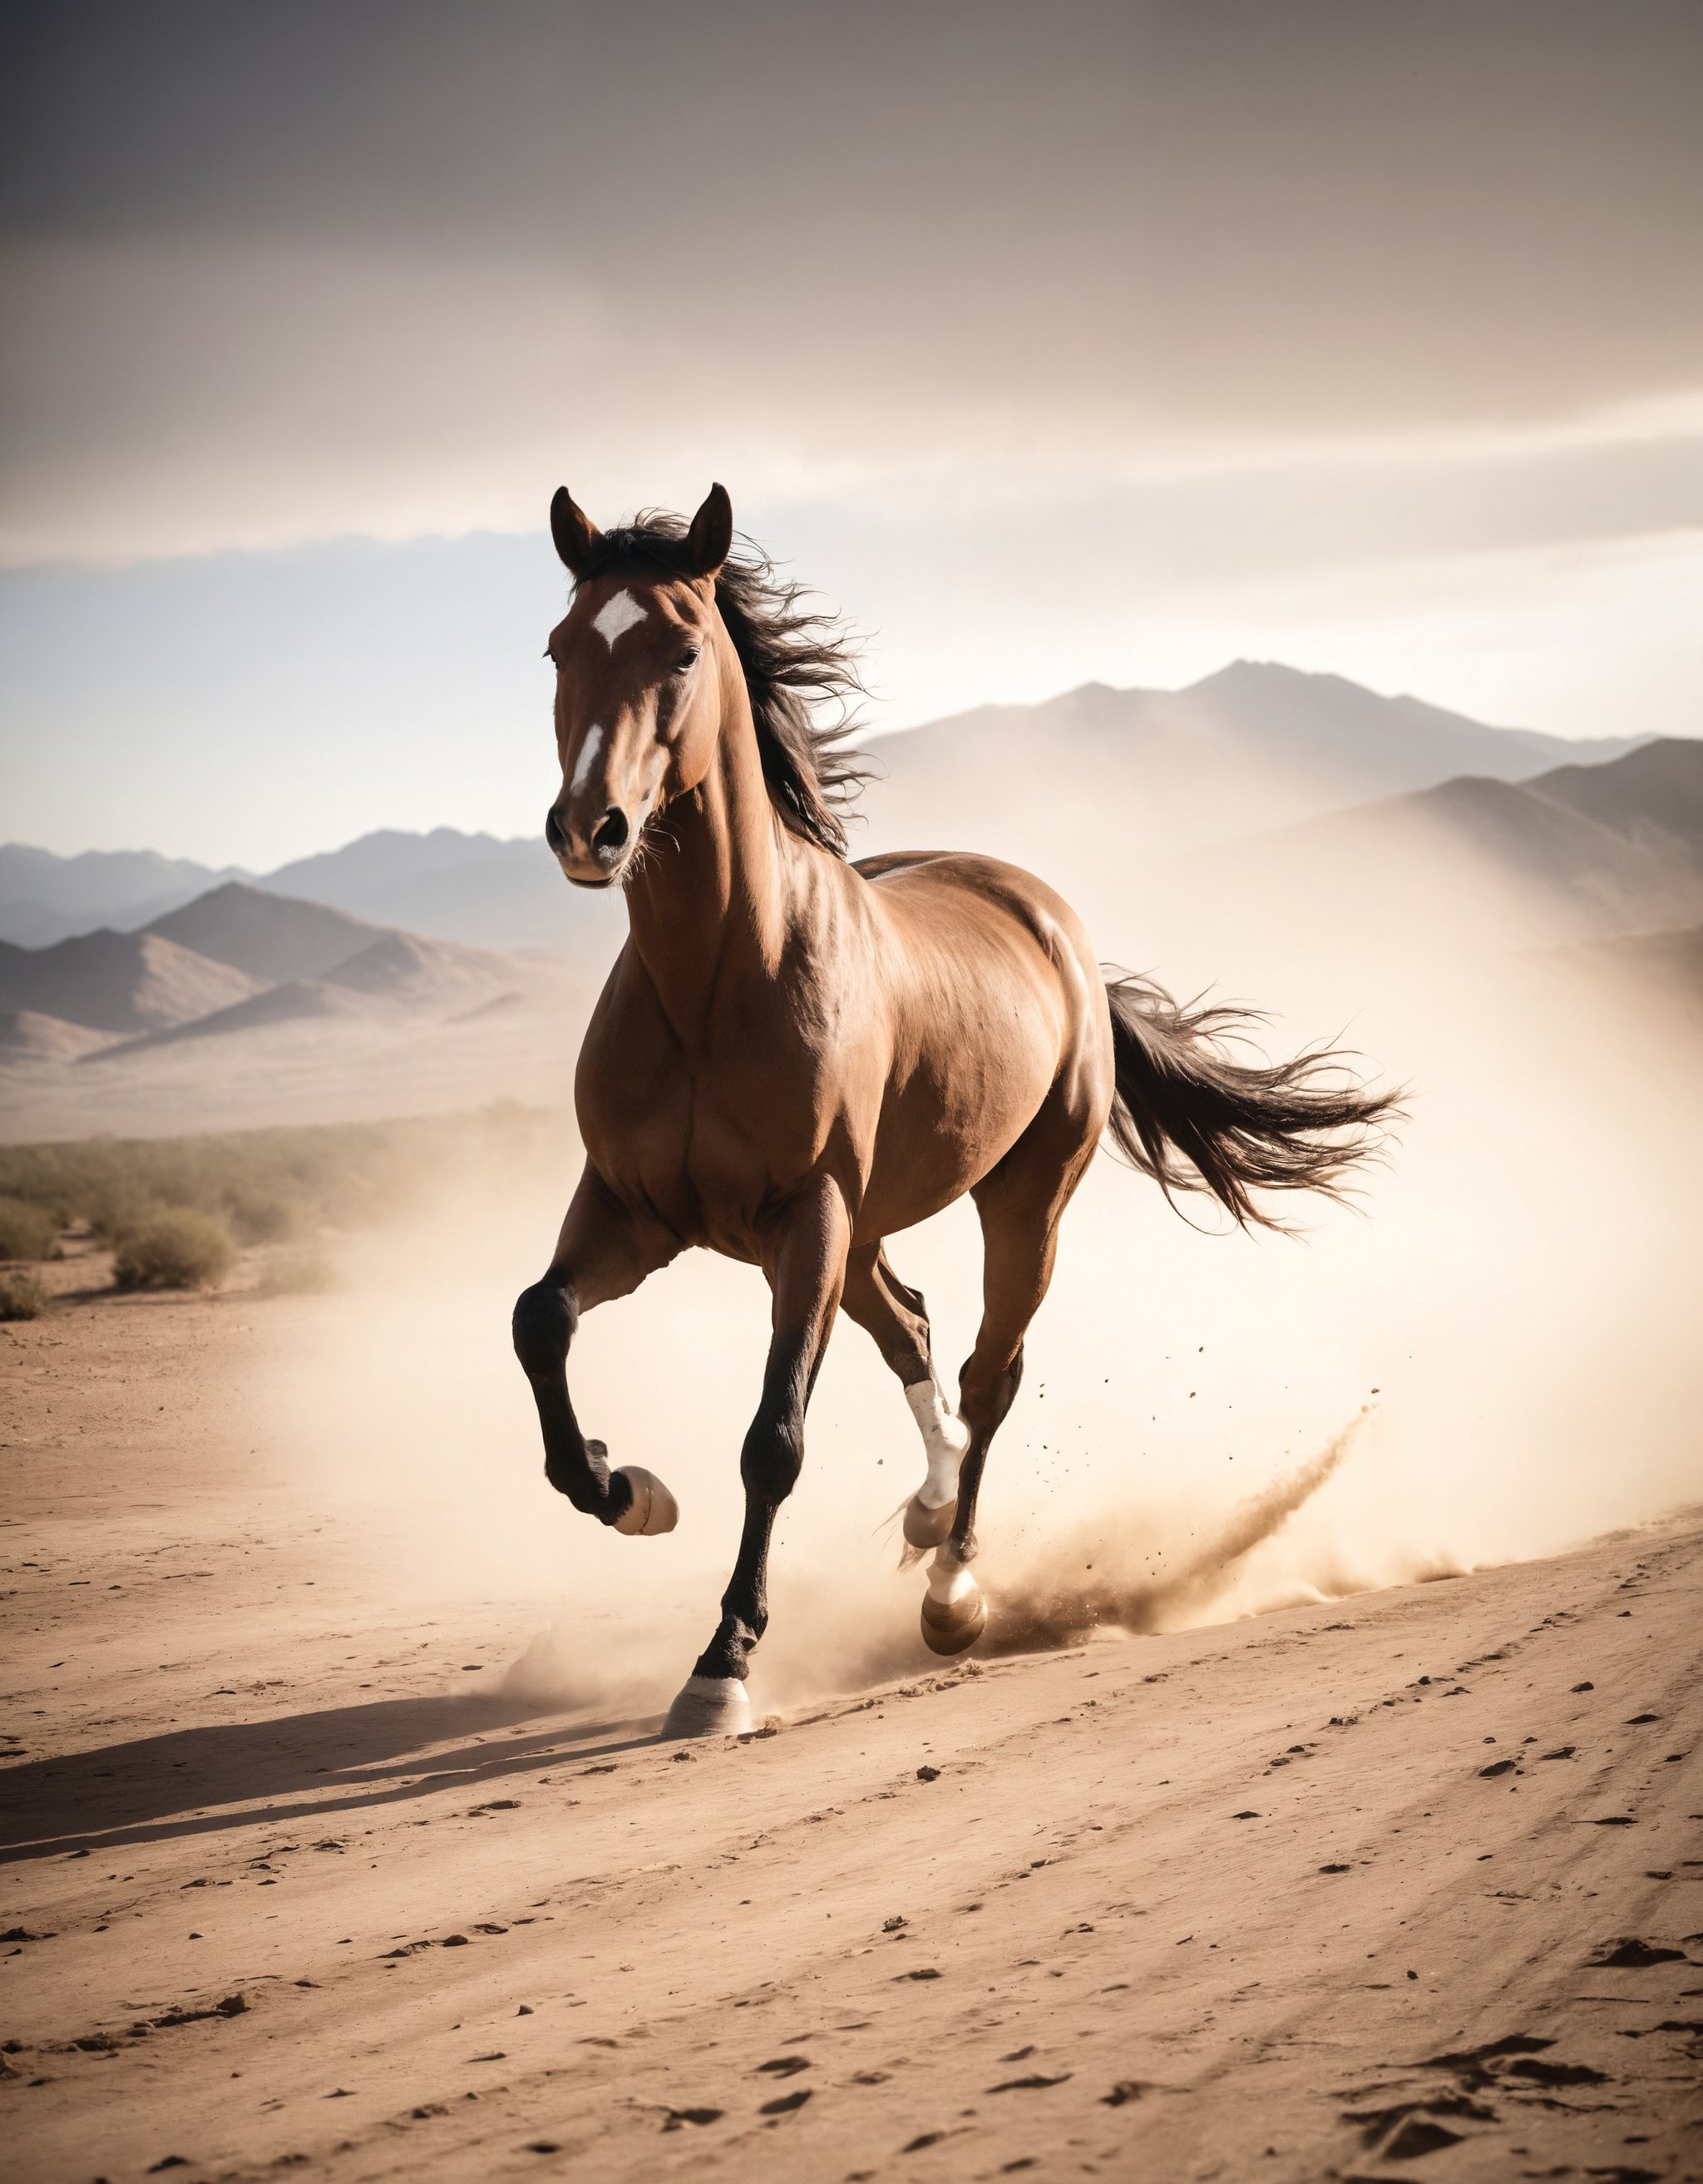 award winning shot of a horse running in the desert, zavy-dtchngl, atmospheric haze, dynamic lighting, cinematic still, movie screencap, portrait, dynamic pose, 100mm f/2.8 macro lens, close-up